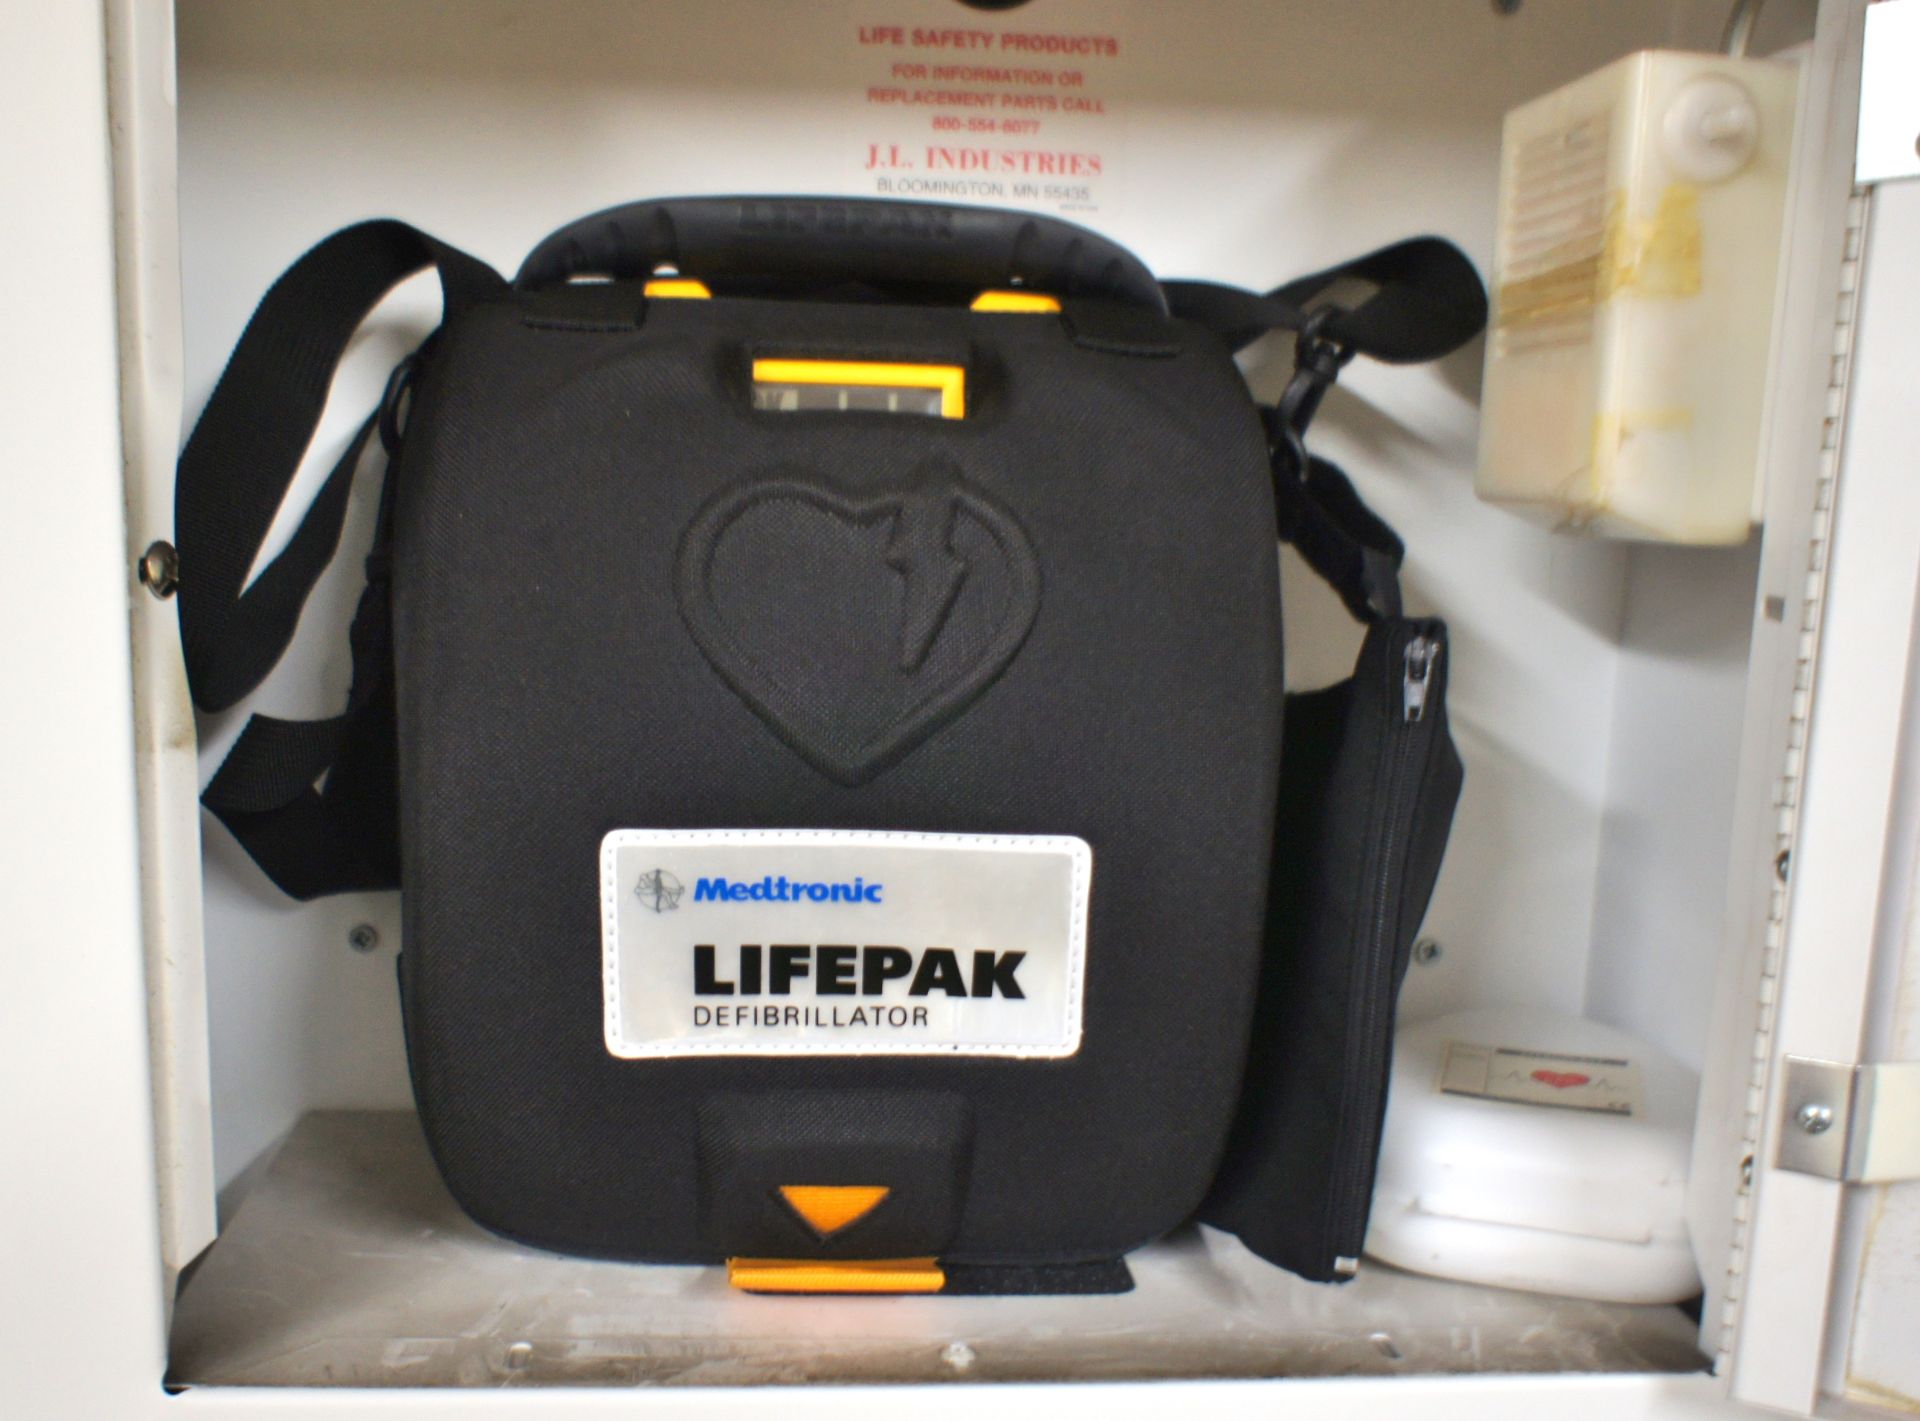 Medtronic Lifepak defibrillator - Image 2 of 4